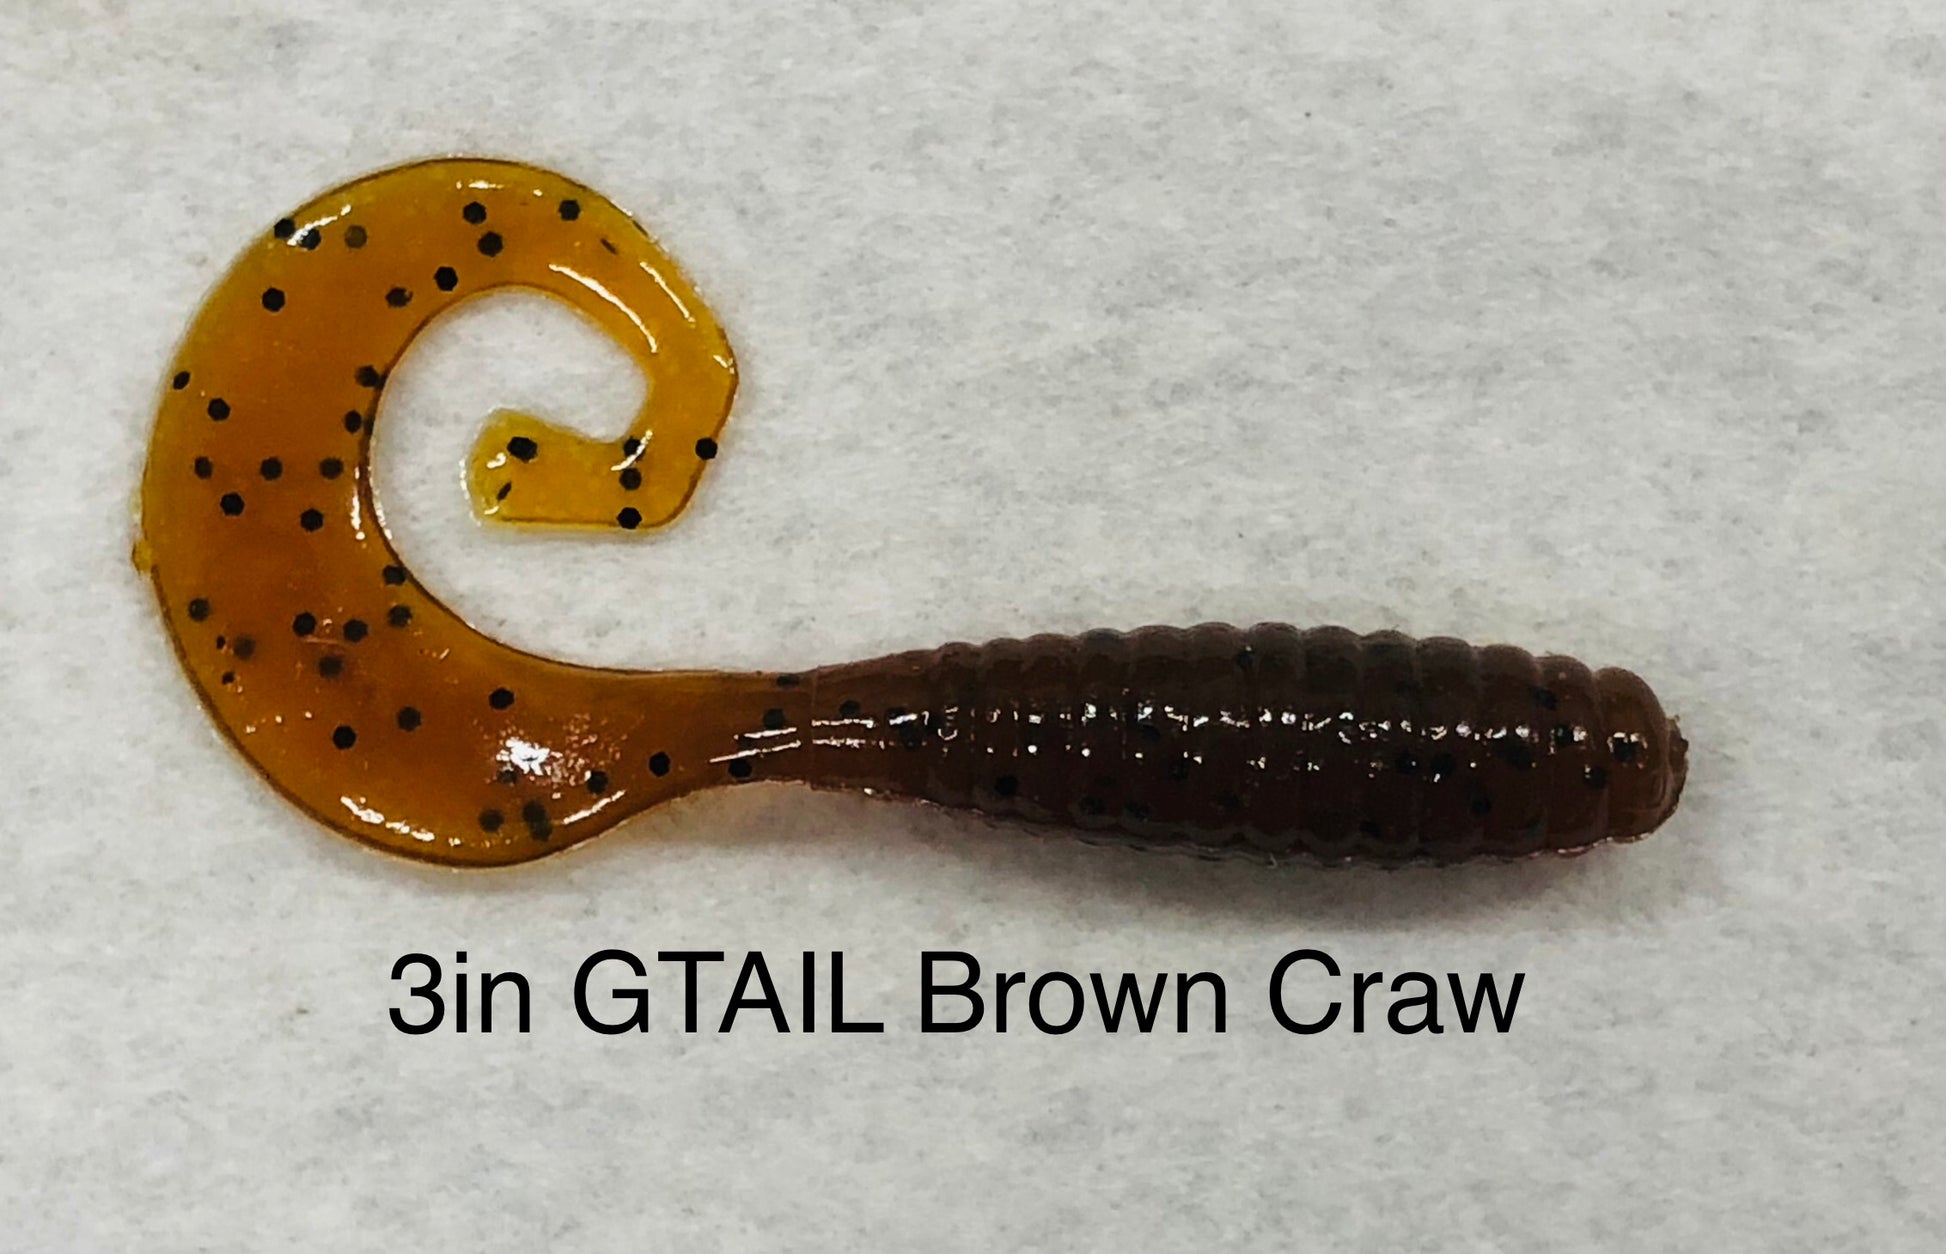 gitzit-g-tail-grub-brown craw-3in-19195